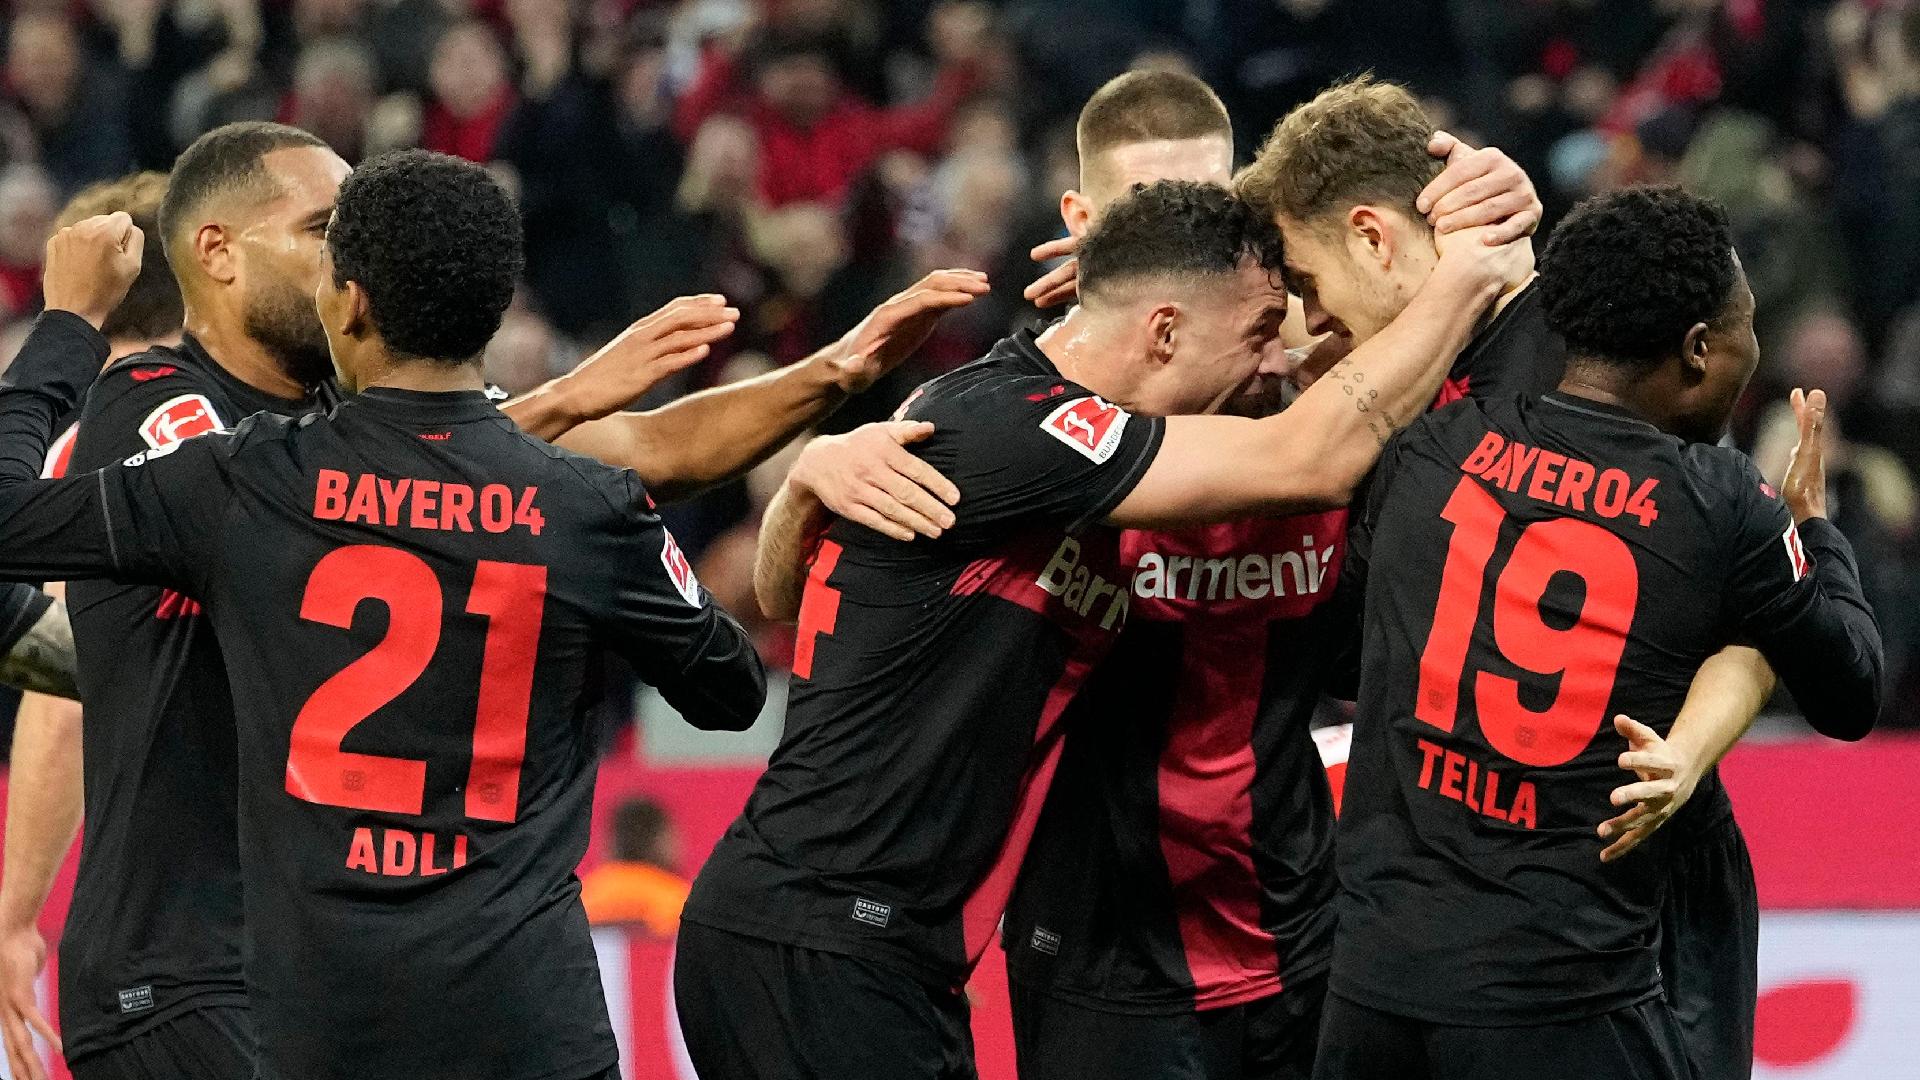 Bayer Leverkusen stun Bayern Munich to take control of Bundesliga title race